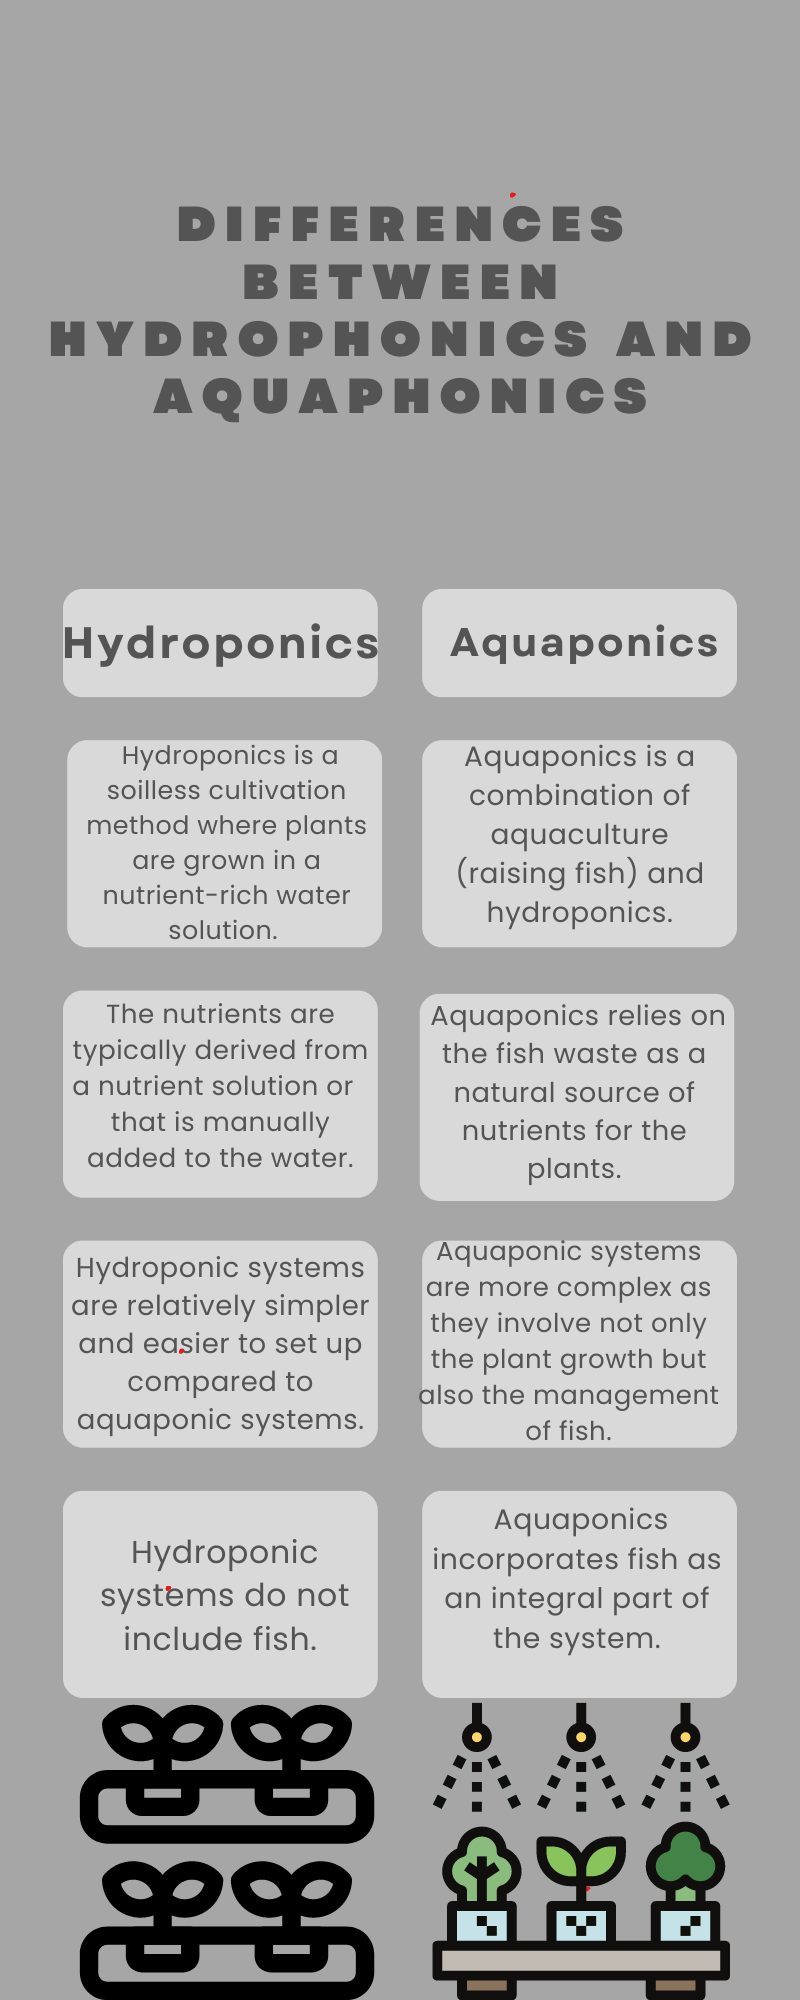 differences between hydrophonics and aquaphonics - infographic